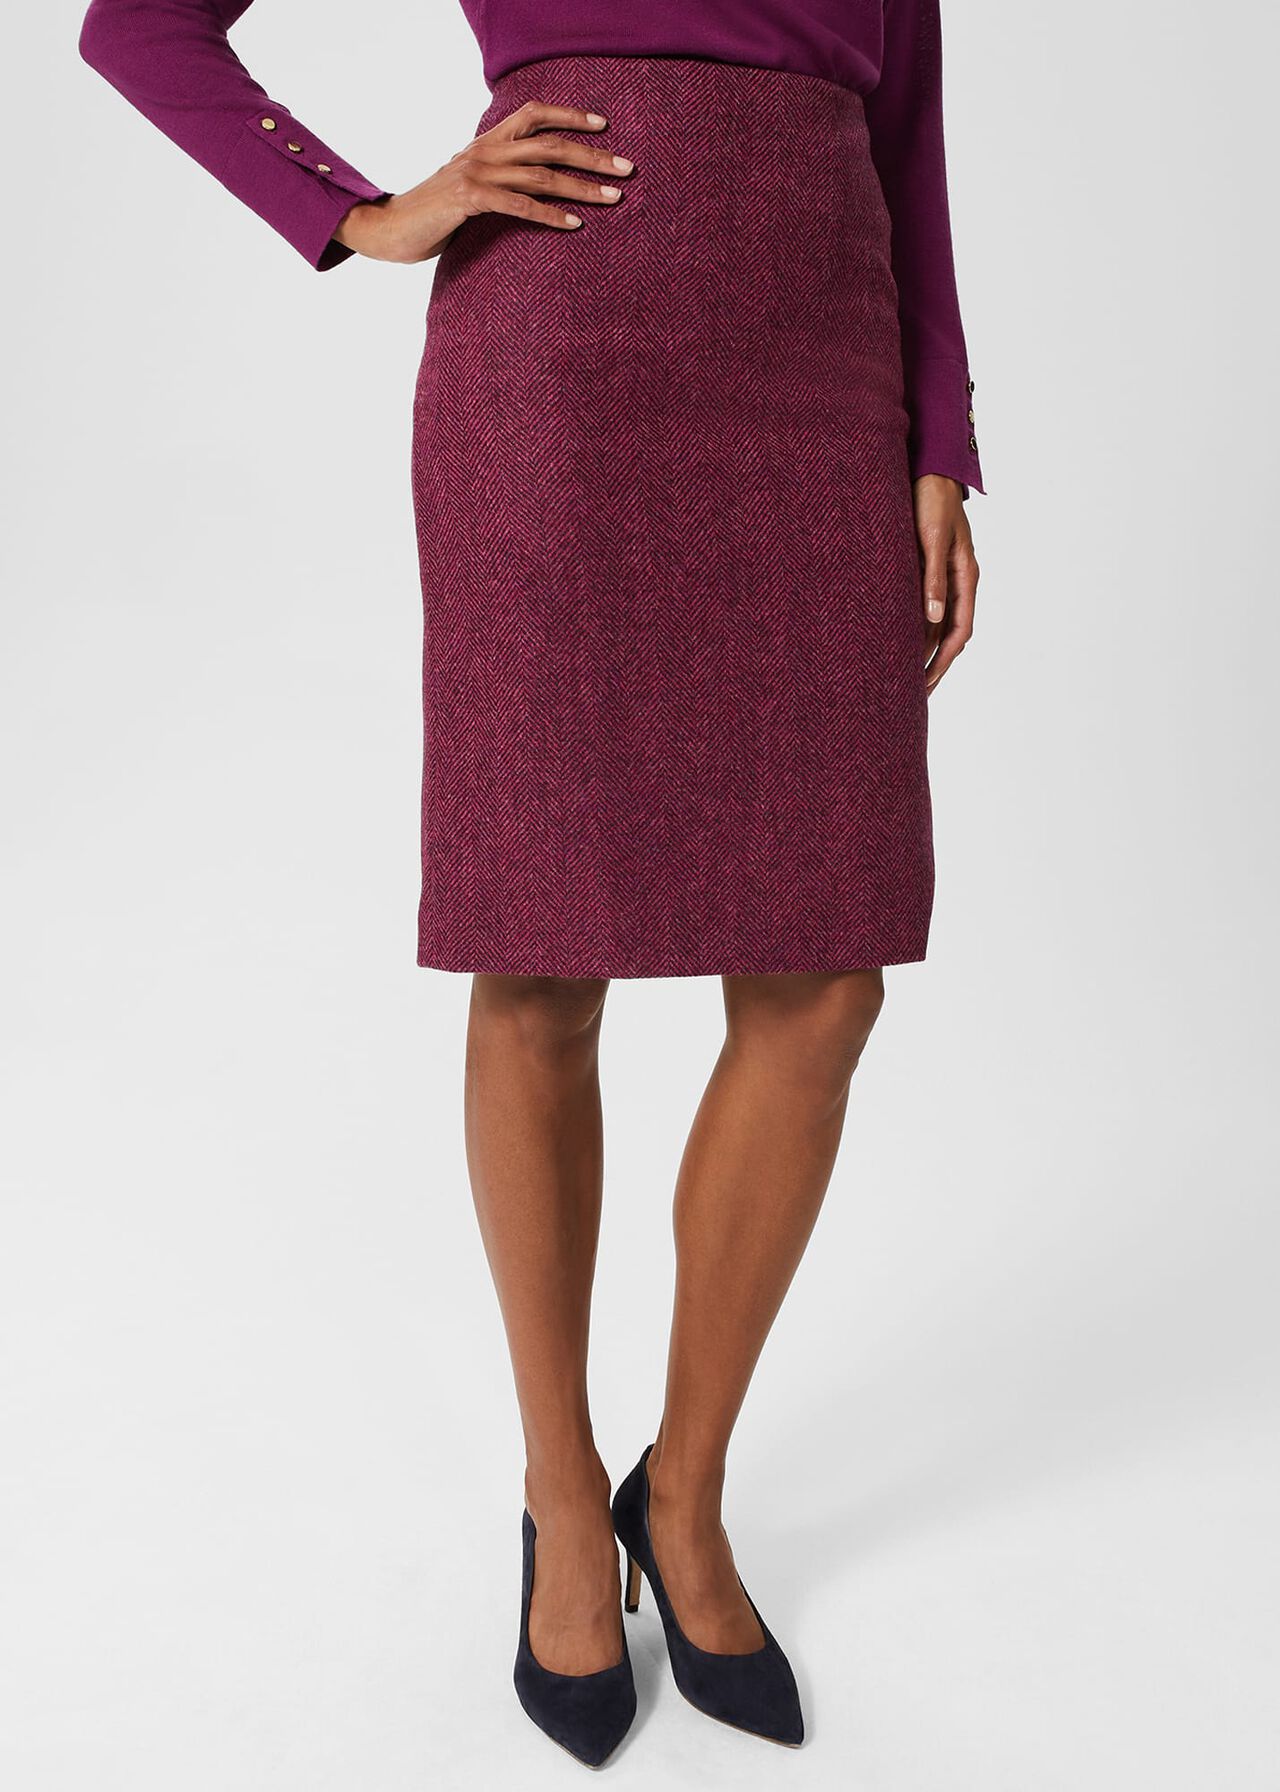 Daphne Wool Skirt, Purple Multi, hi-res